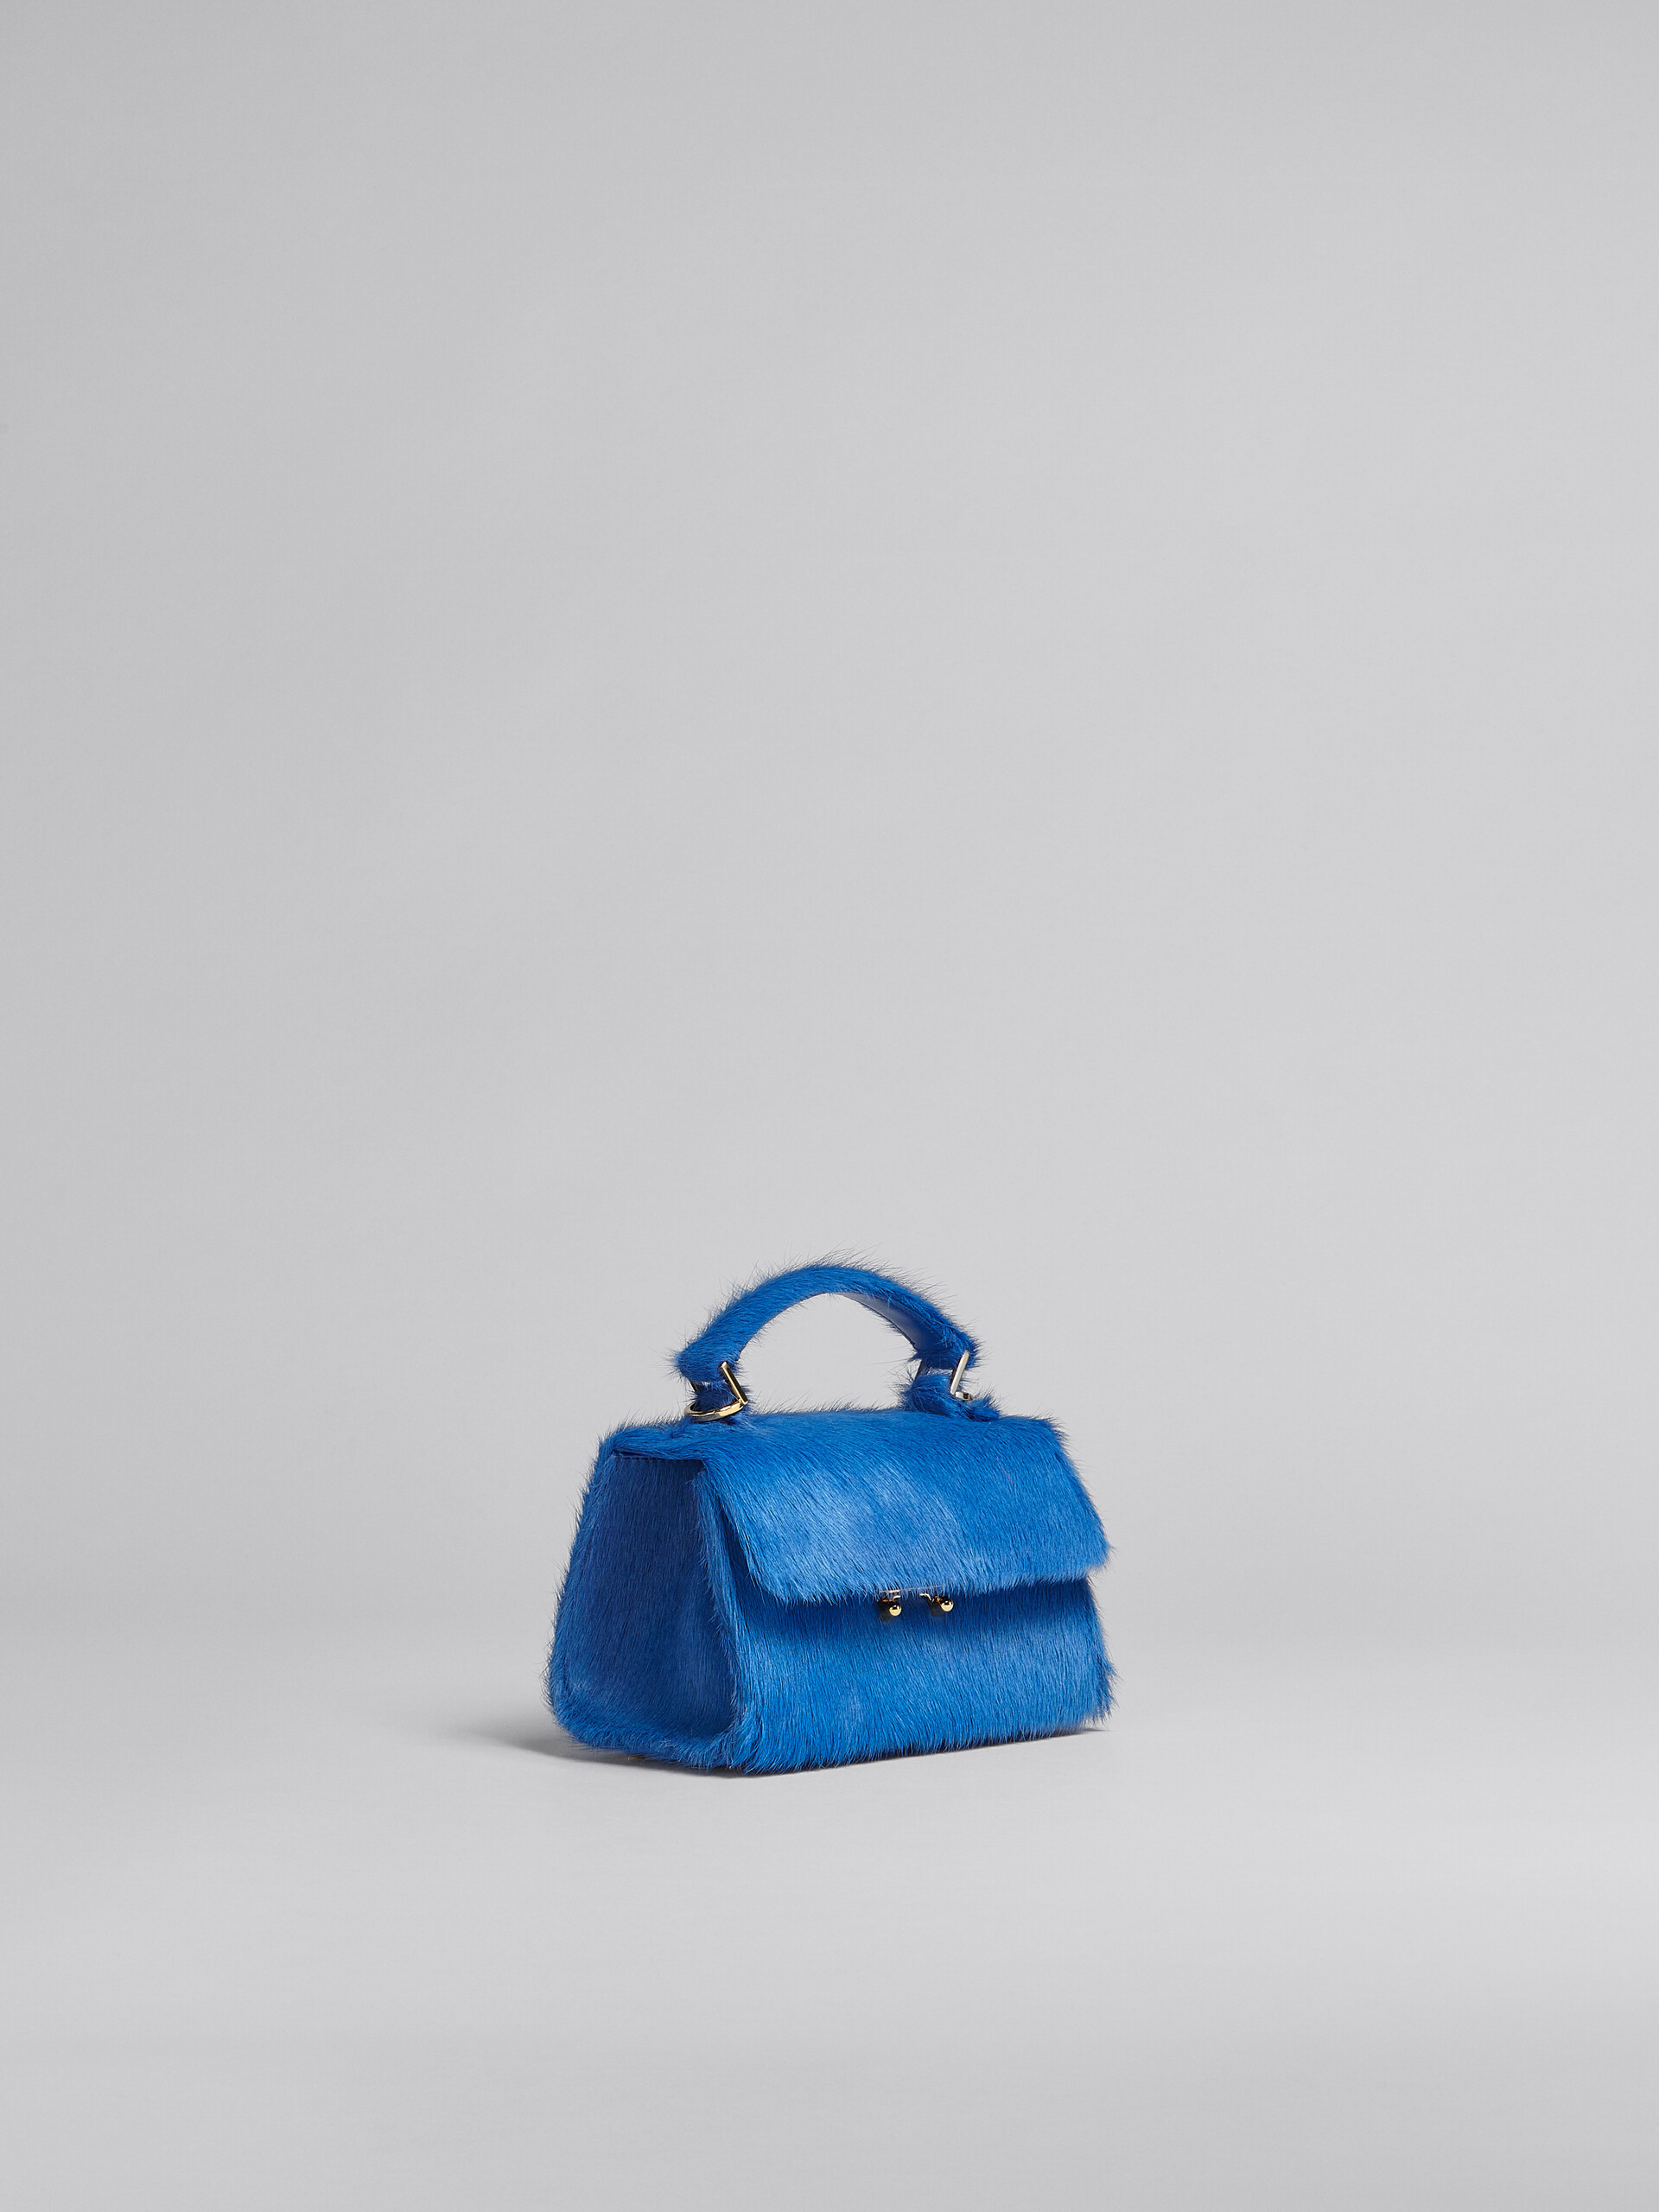 Relativity Mini Bag in blue long hair calfskin - Handbag - Image 6